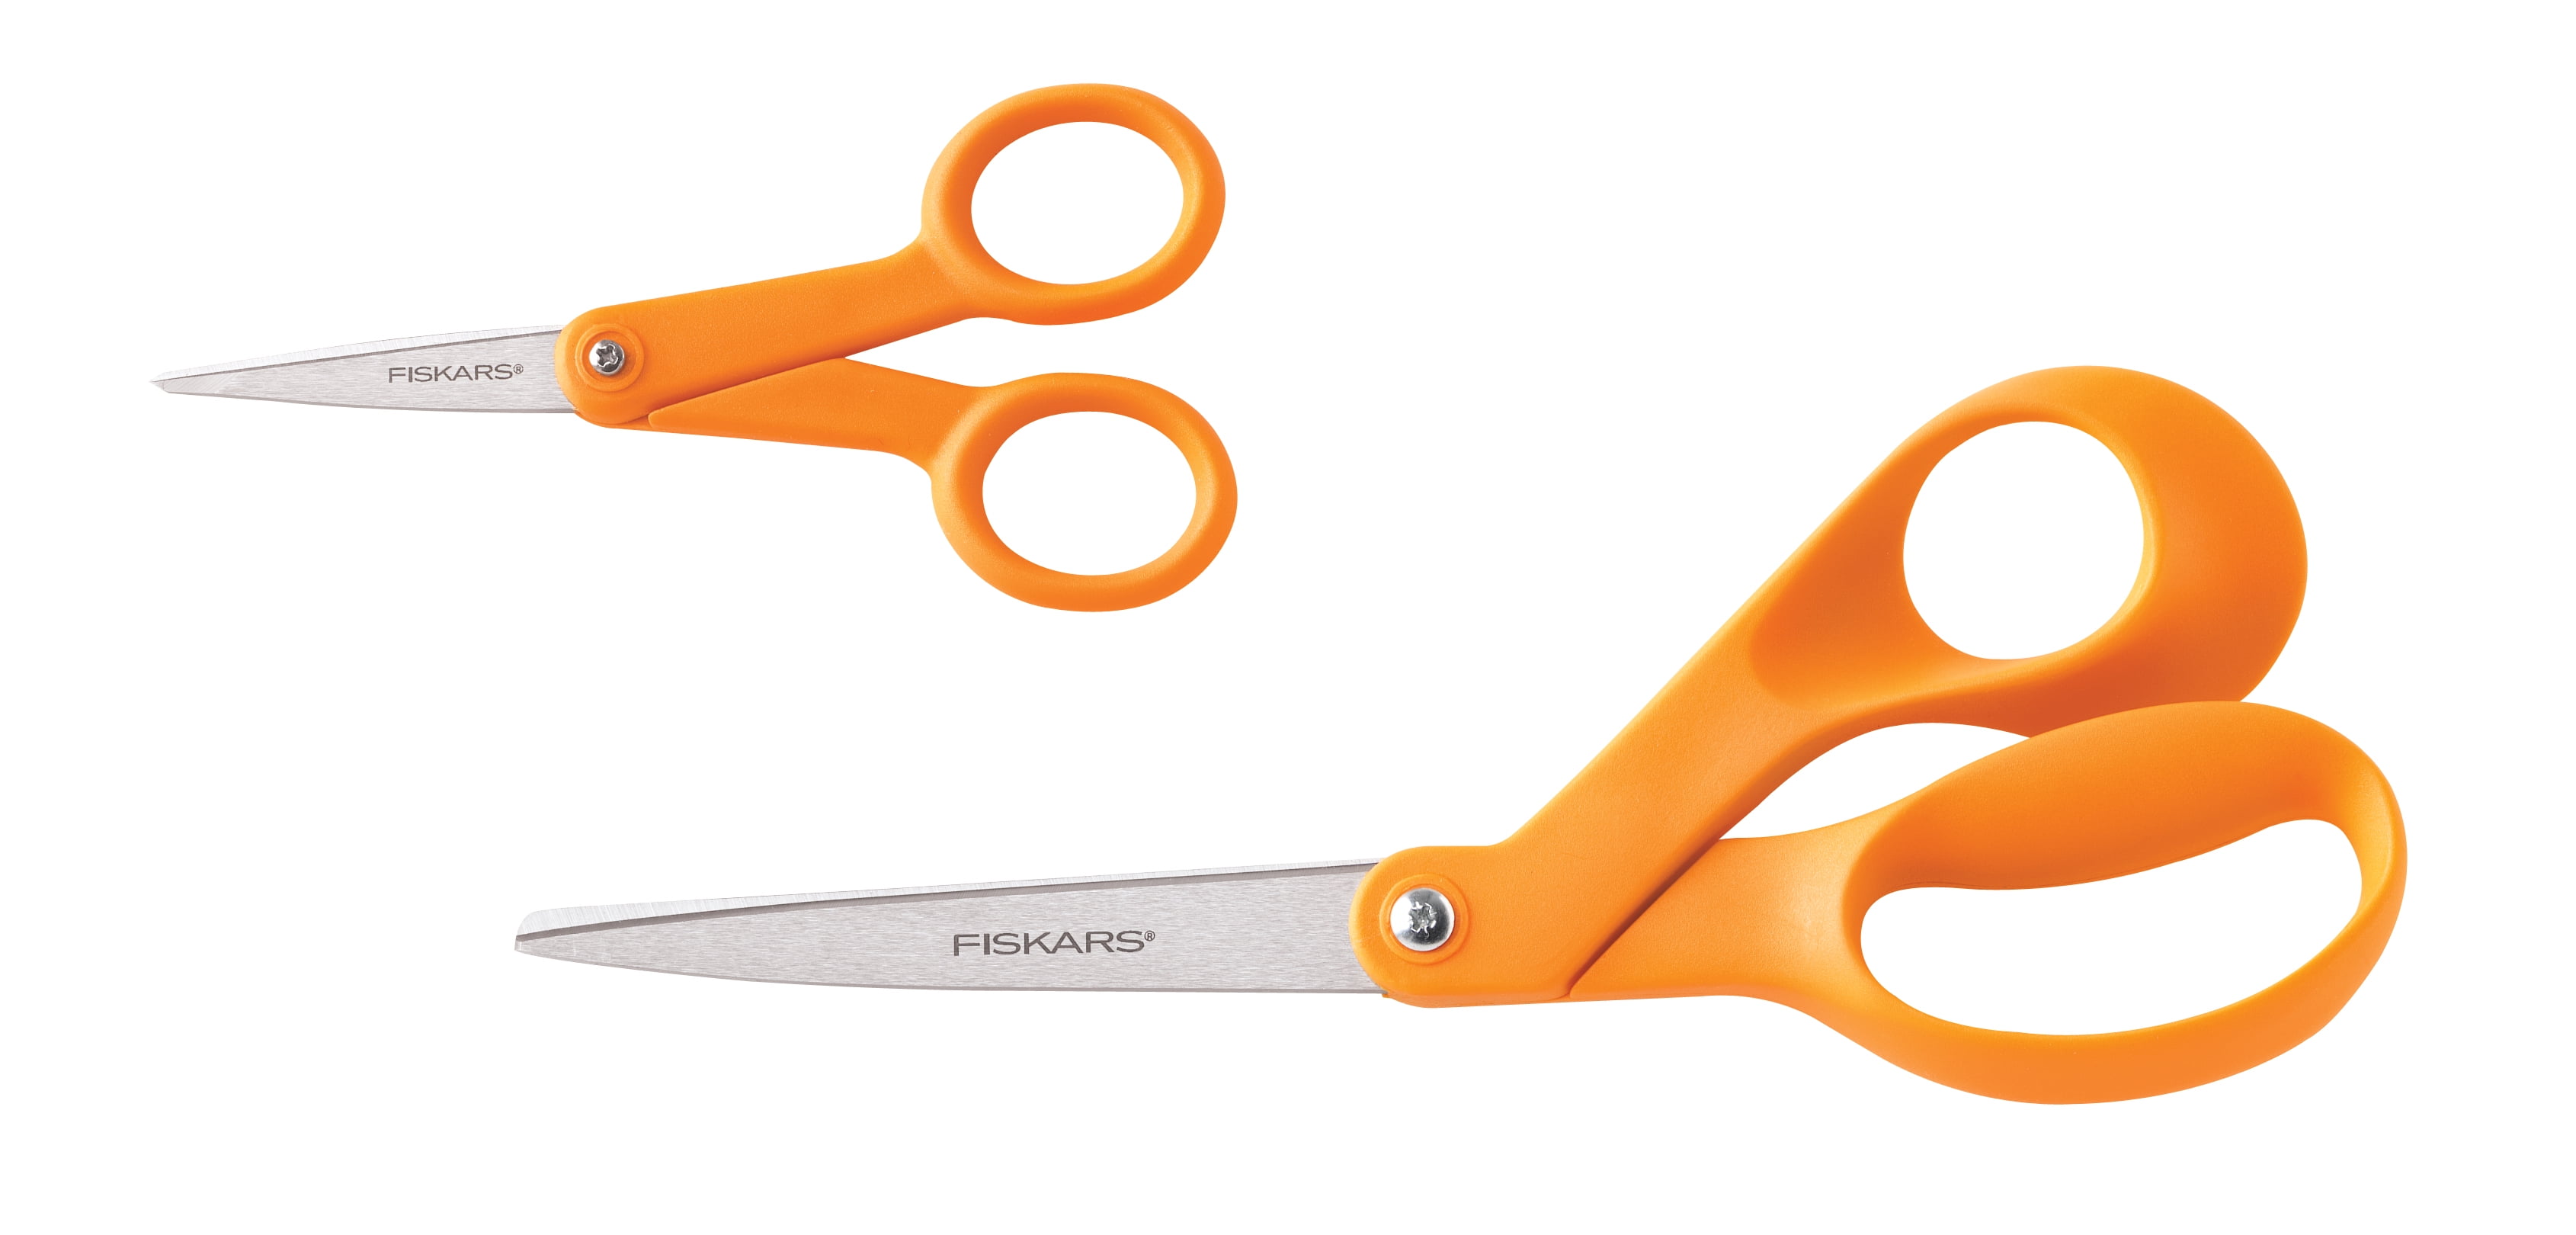 Fiskars 8 Orange-Handled Scissors & 5 Micro Tip Scissors Set, 2 Count